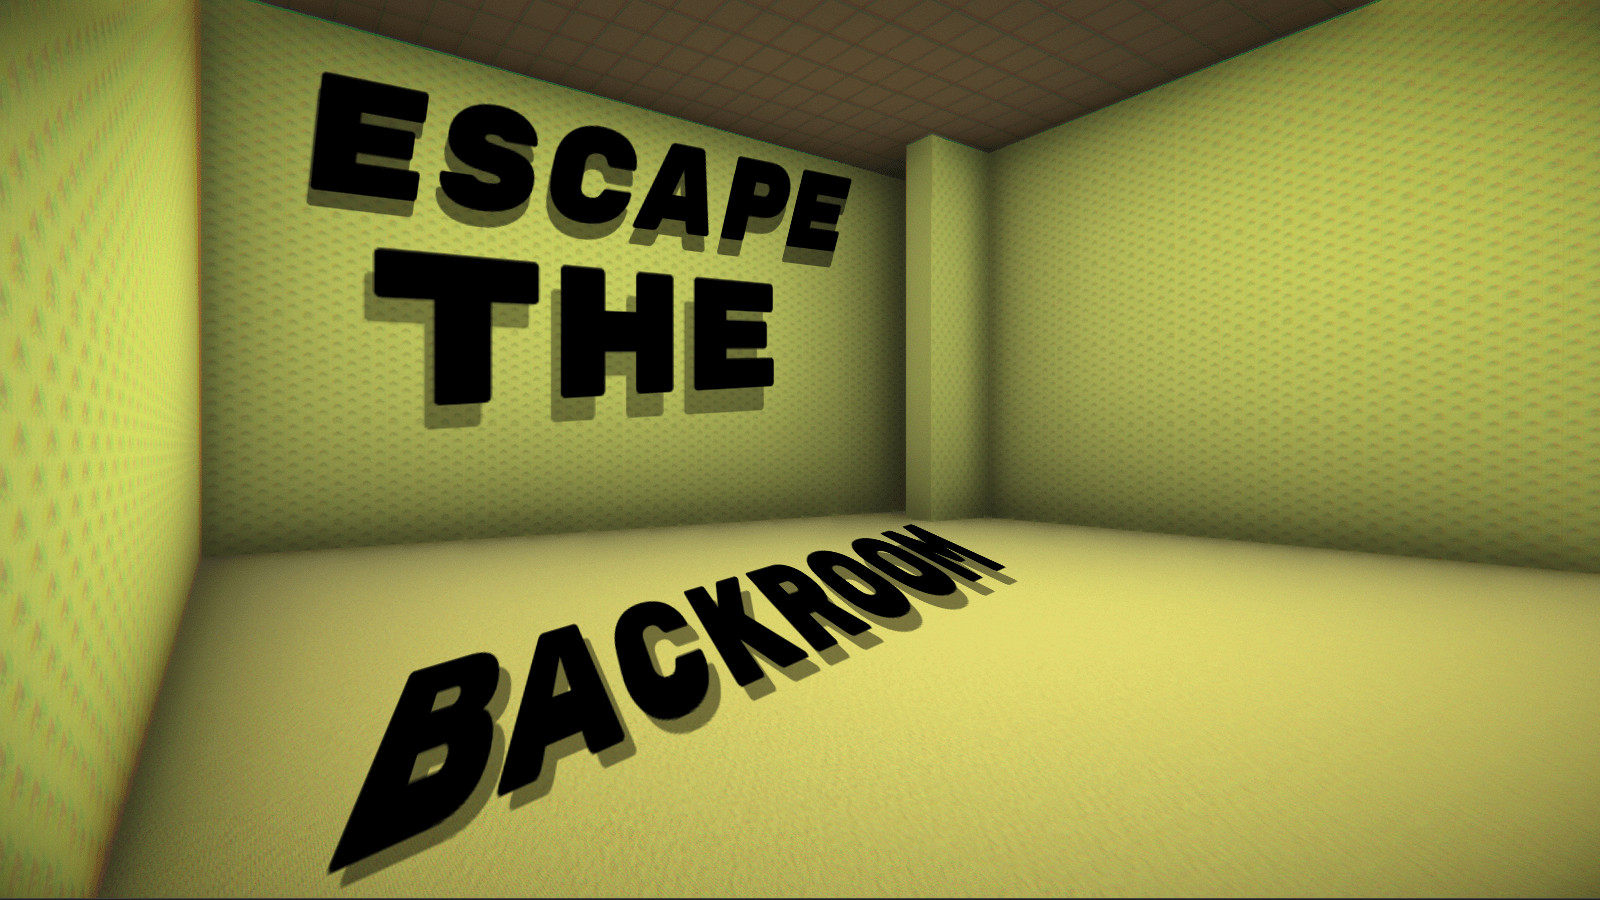 Escape the BACKROOM by 1actose